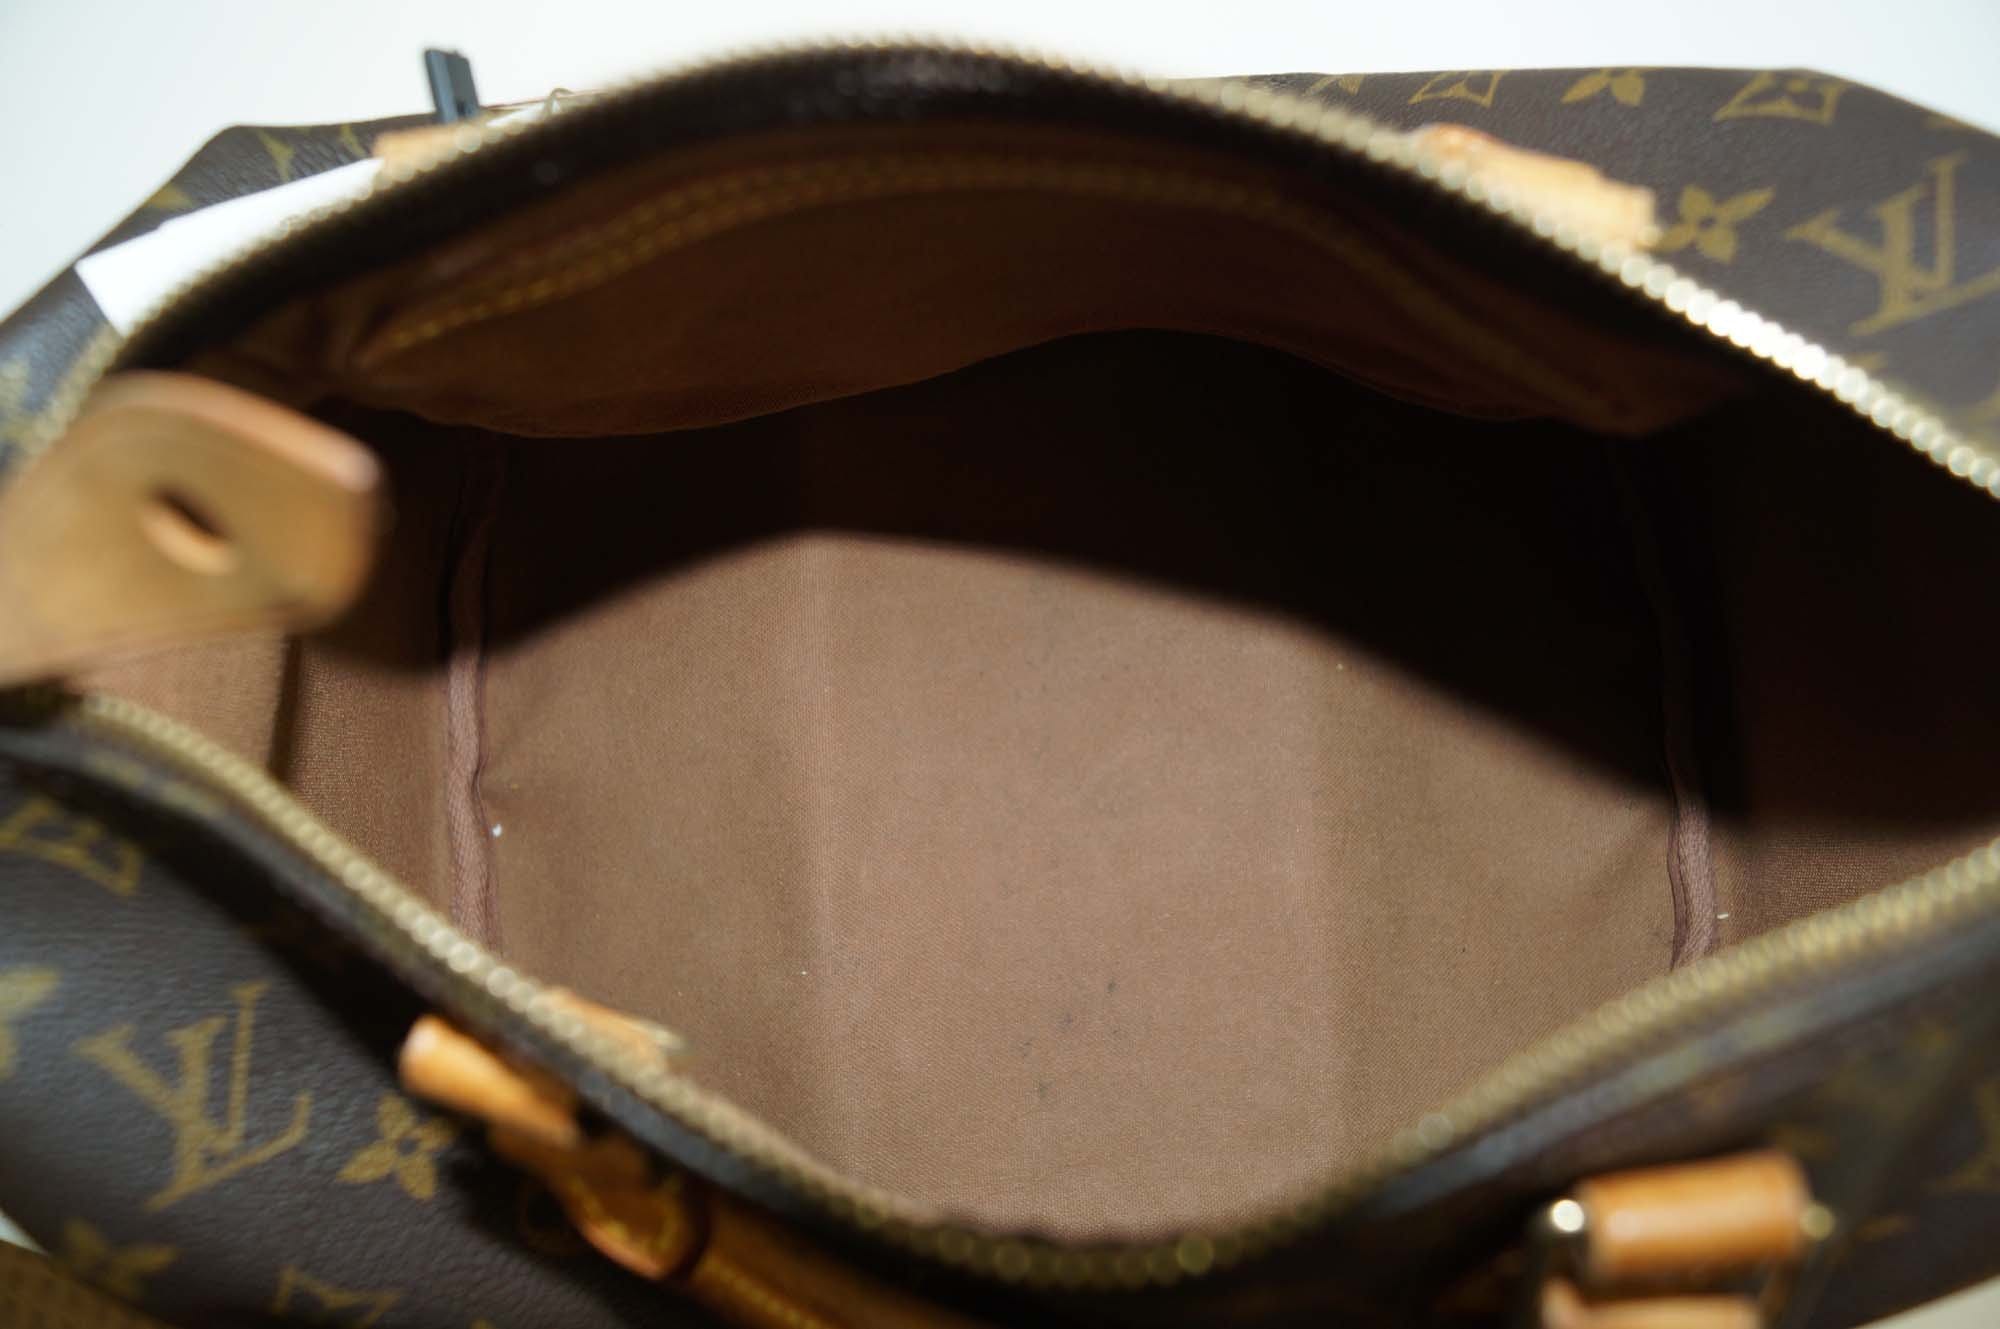 Authentic Louis Vuitton Speedy 30 Hand Bag Monogram Brown #19454